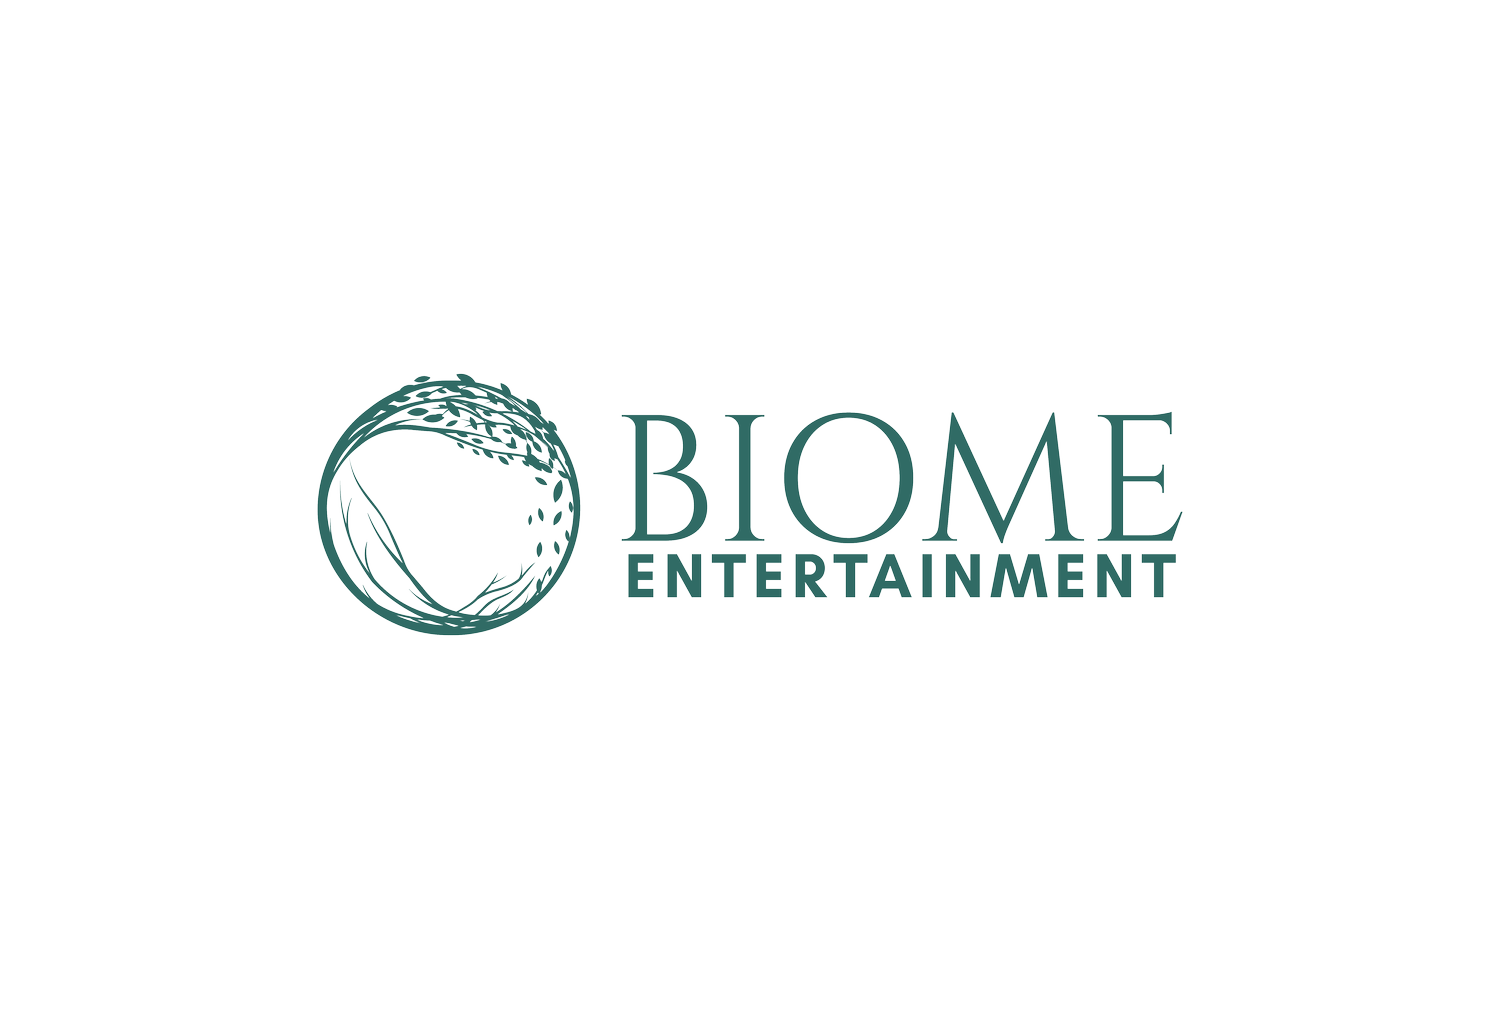 Biome Entertainment